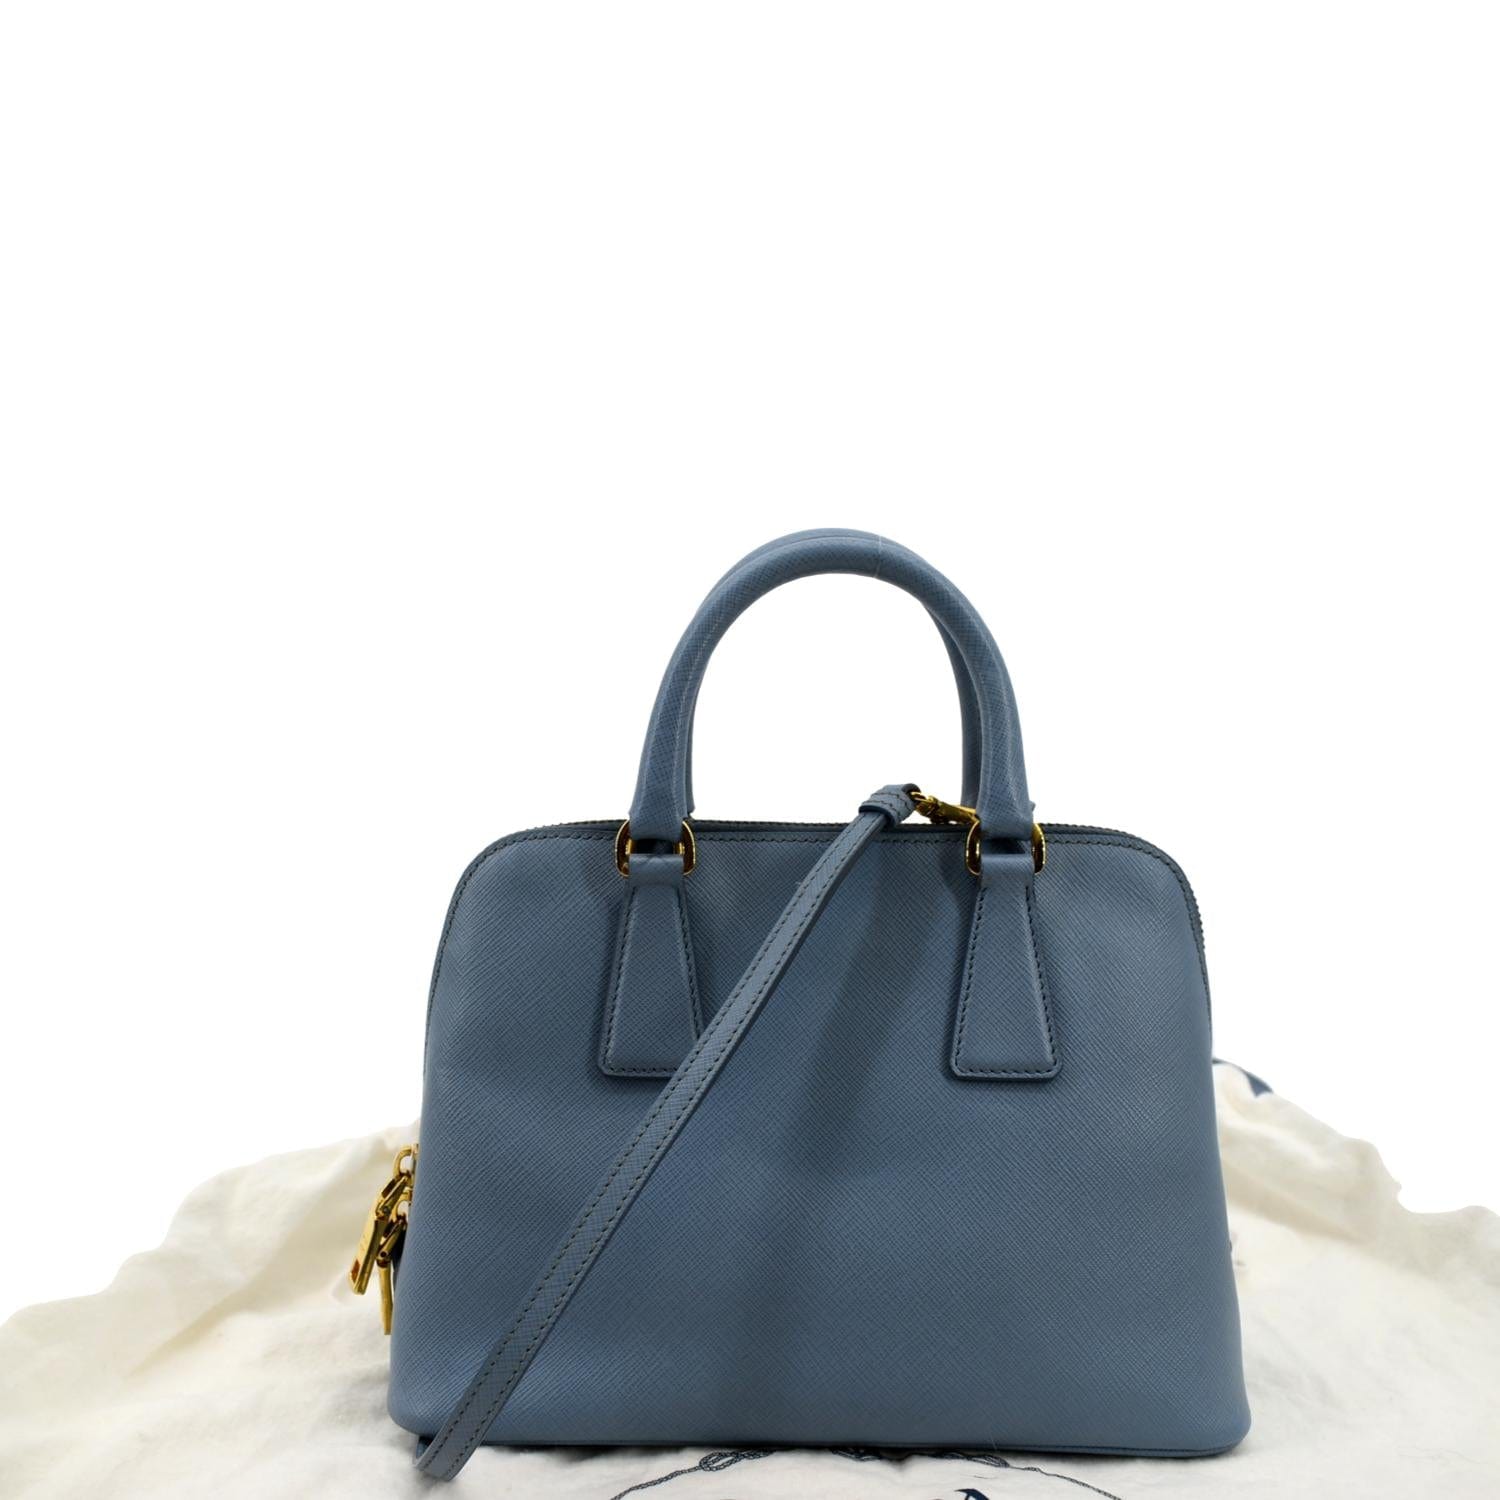 Prada Saffiano Lux Mini - What's In My Bag